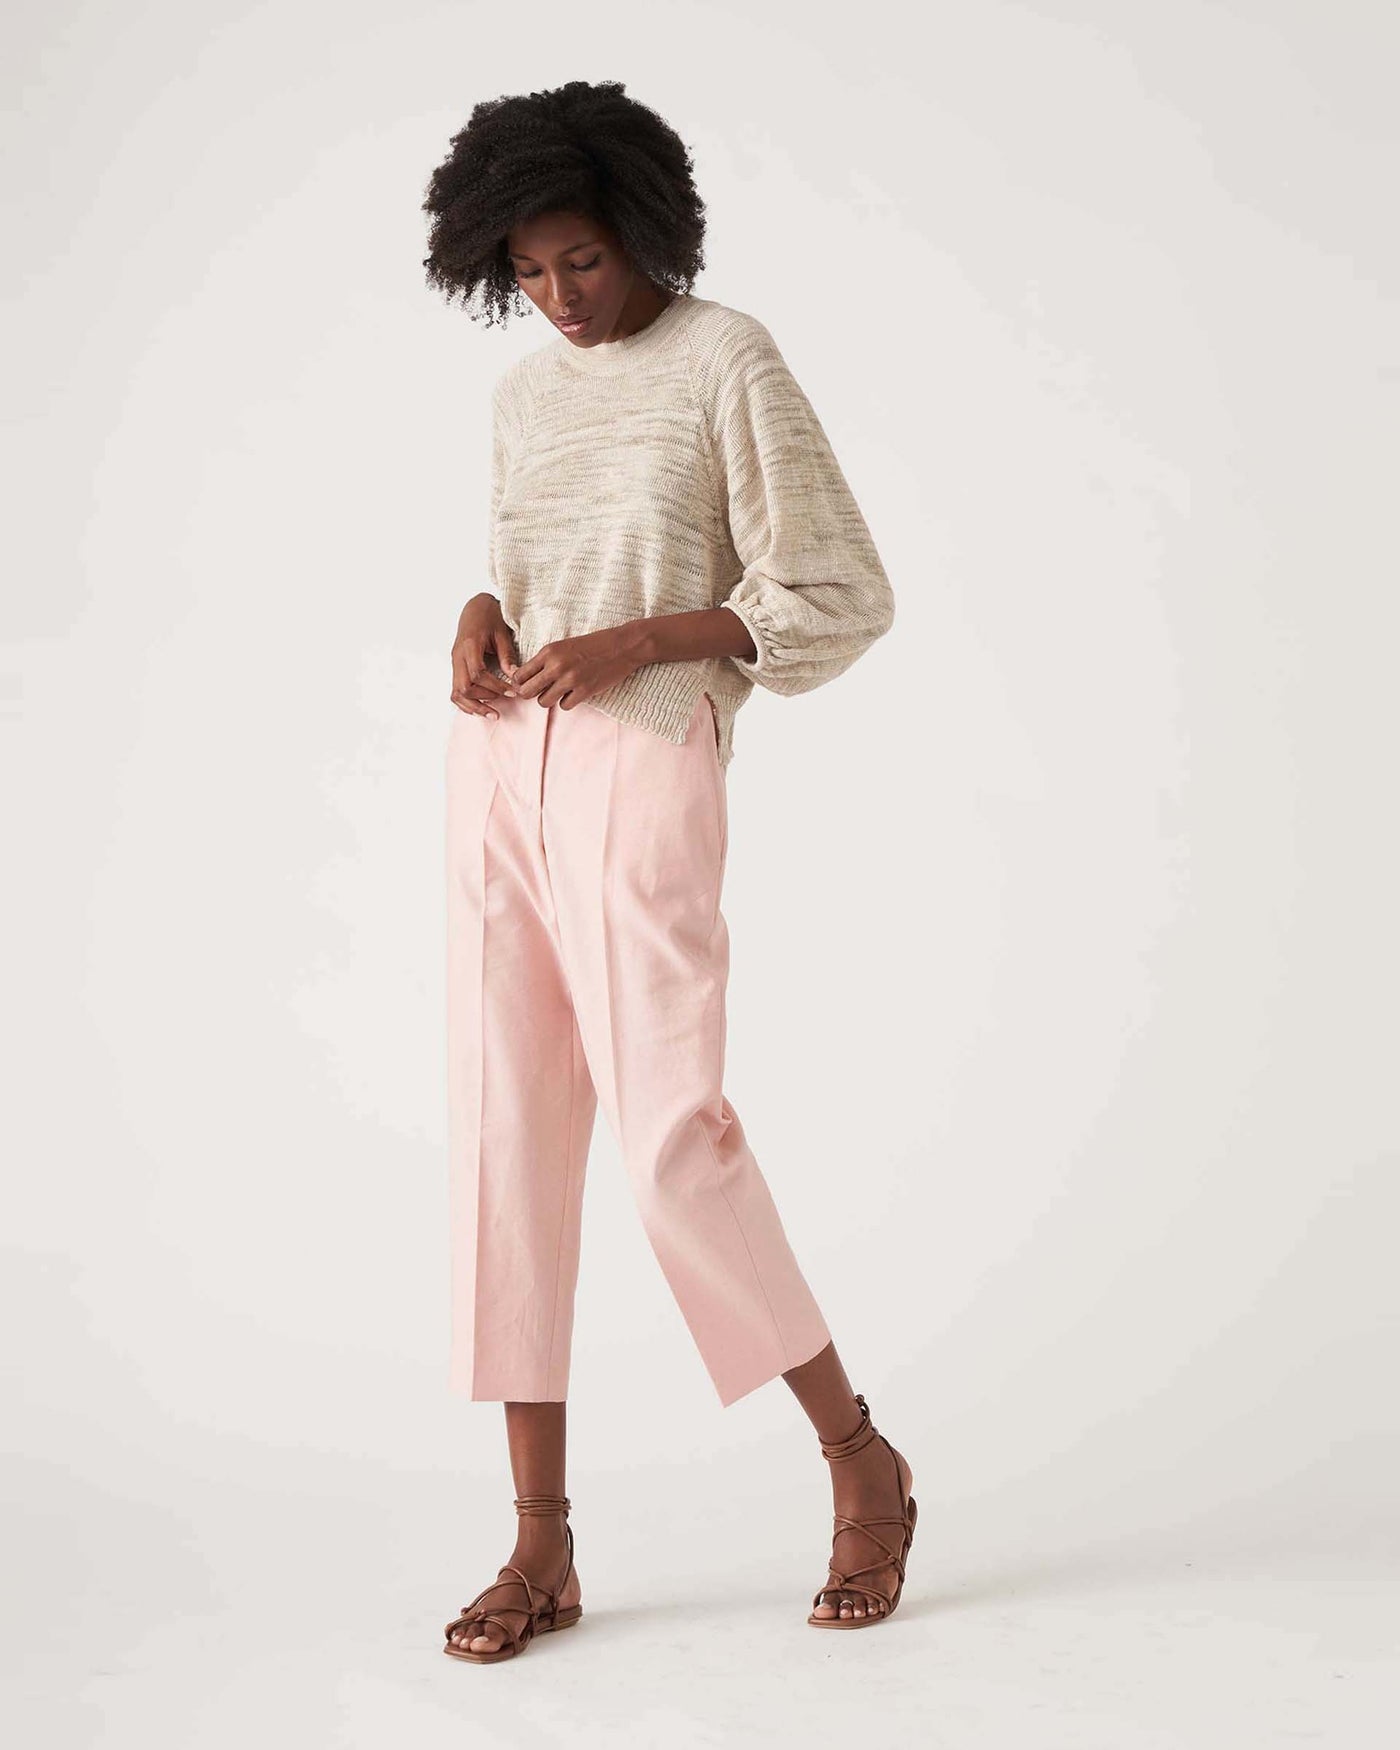 Women's trousers in cotton blend